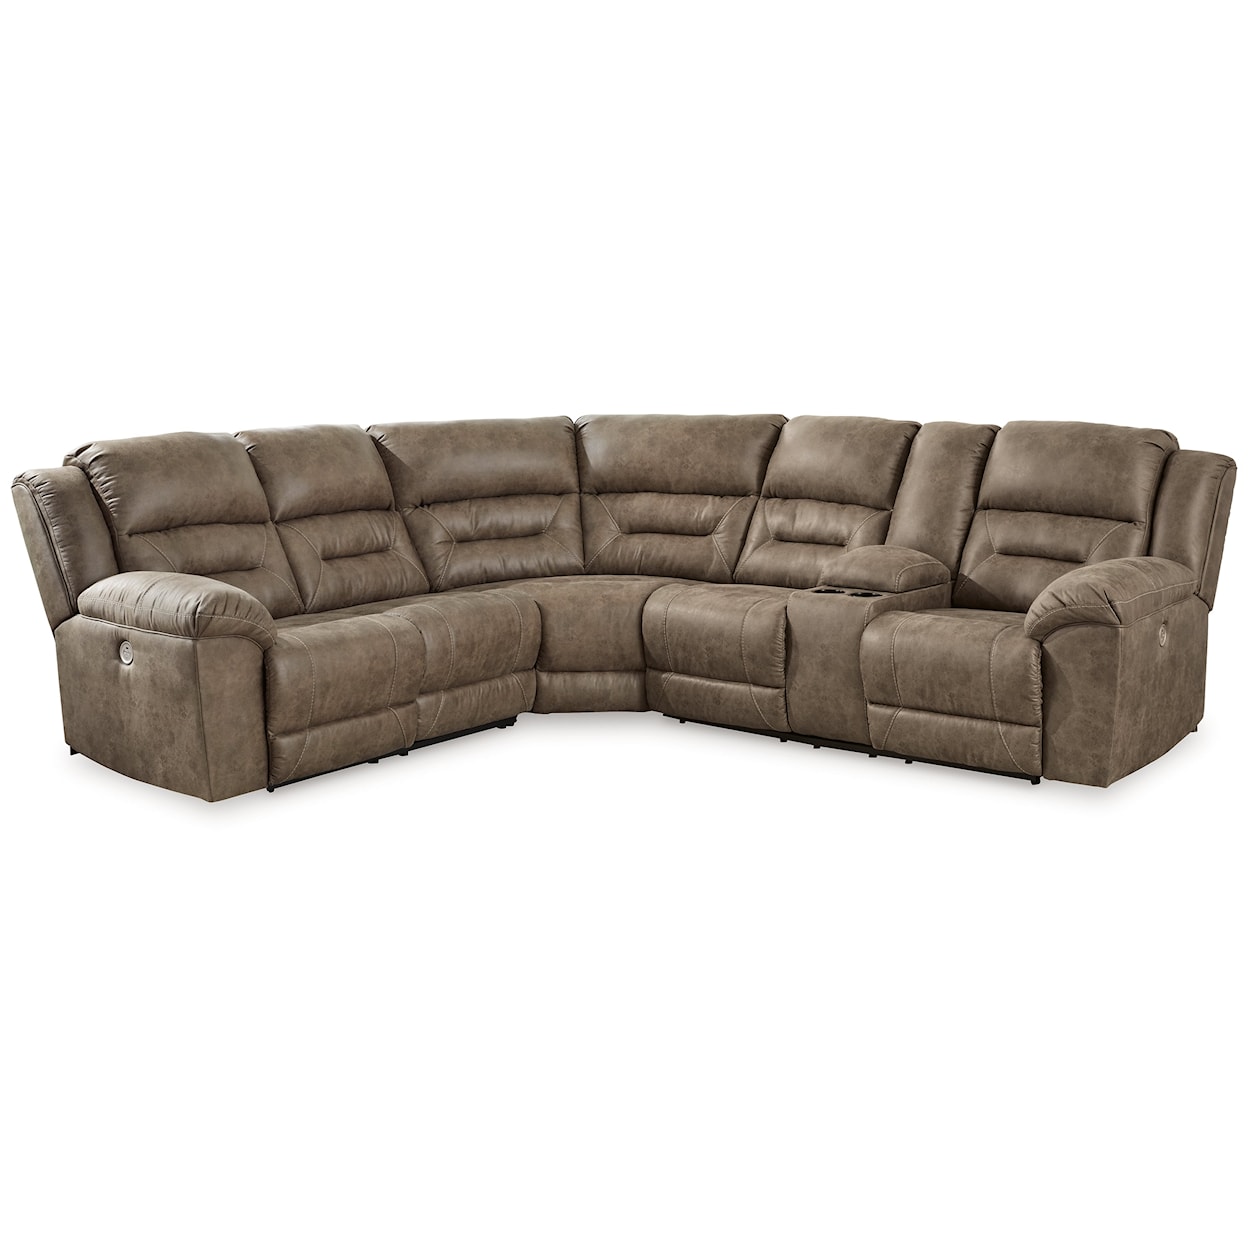 Ashley Furniture Signature Design Ravenel Power Reclining Sectional Sofa